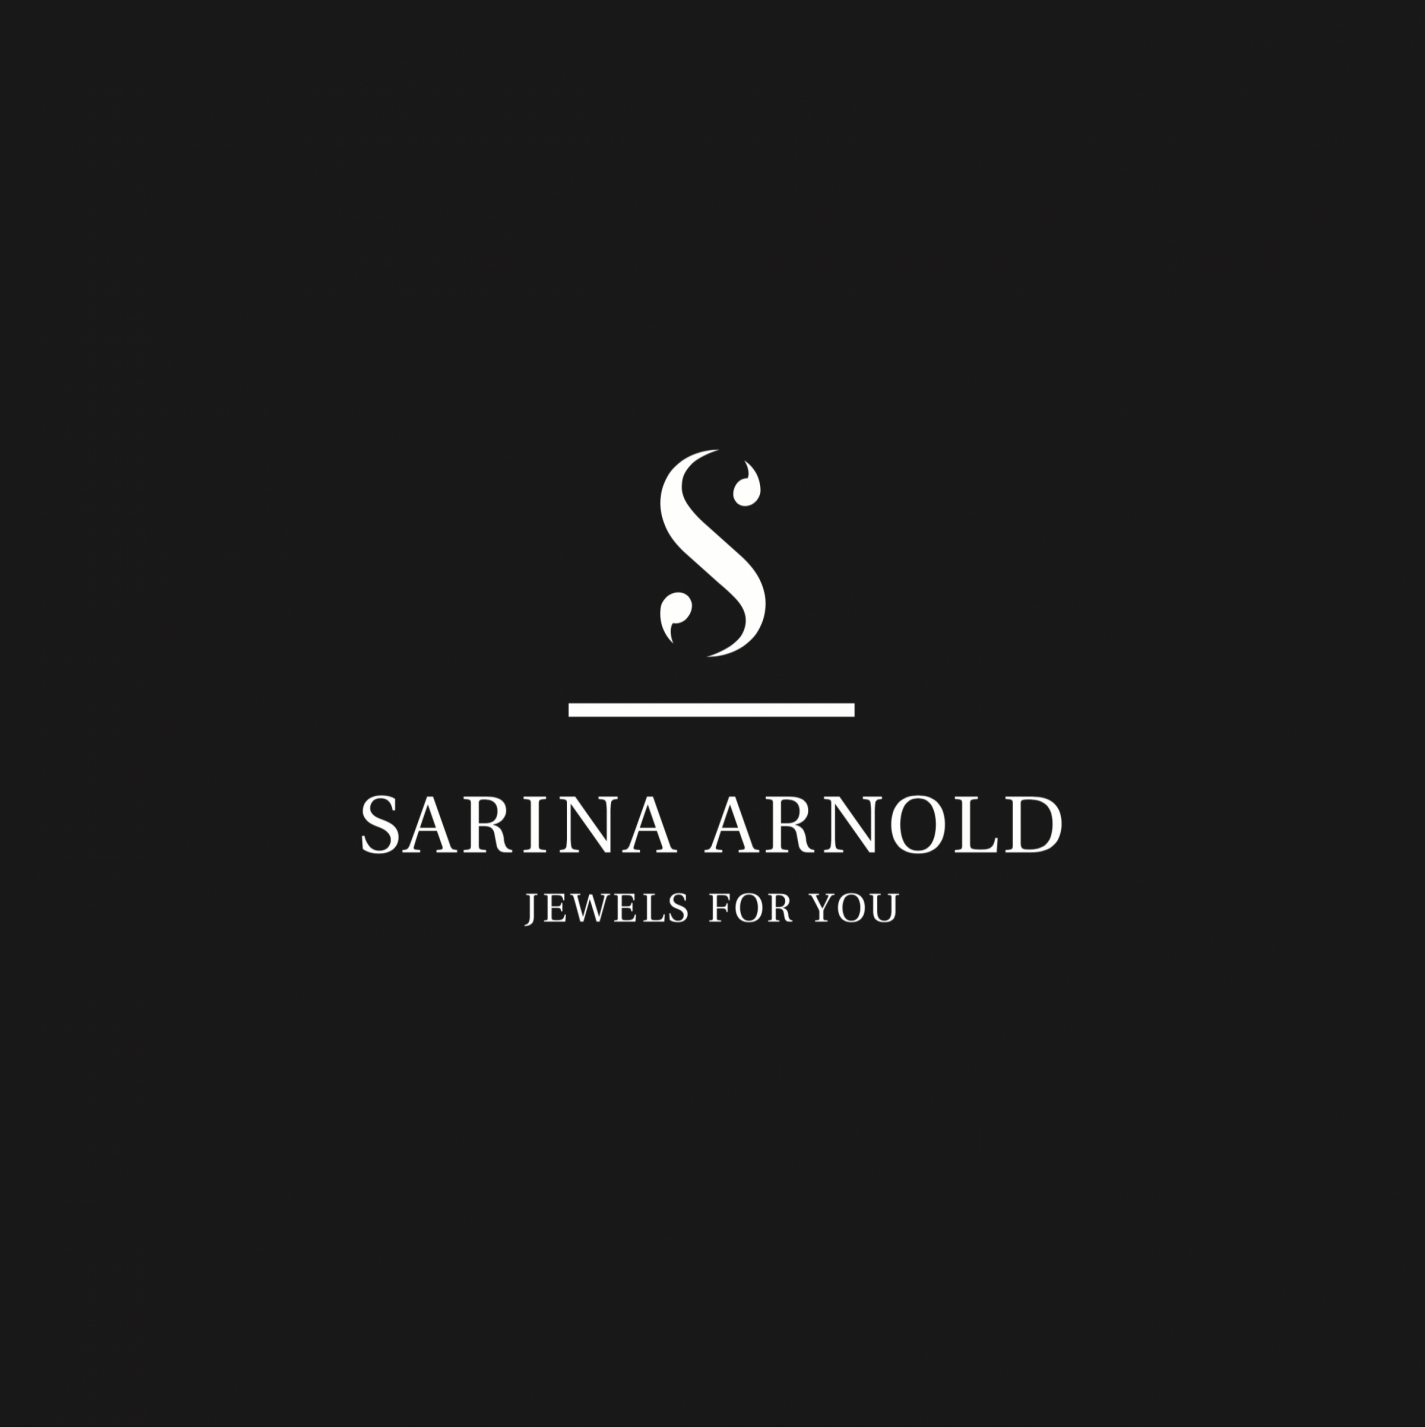 Sarina Arnold